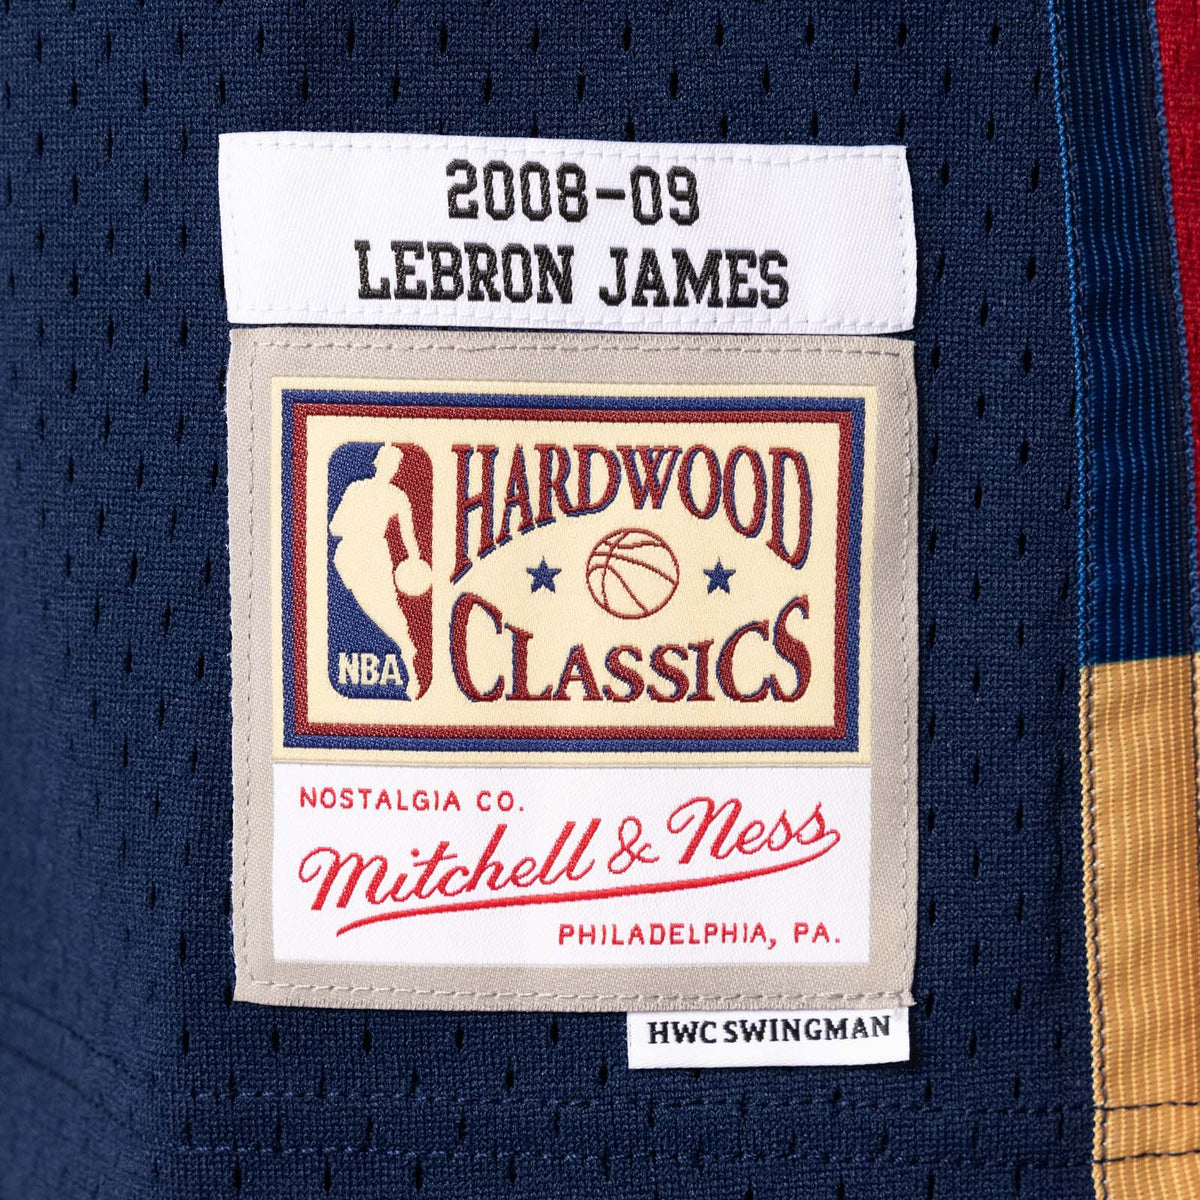 LeBron James 08-09 Cleveland Cavaliers Hardwood Classic Swingman